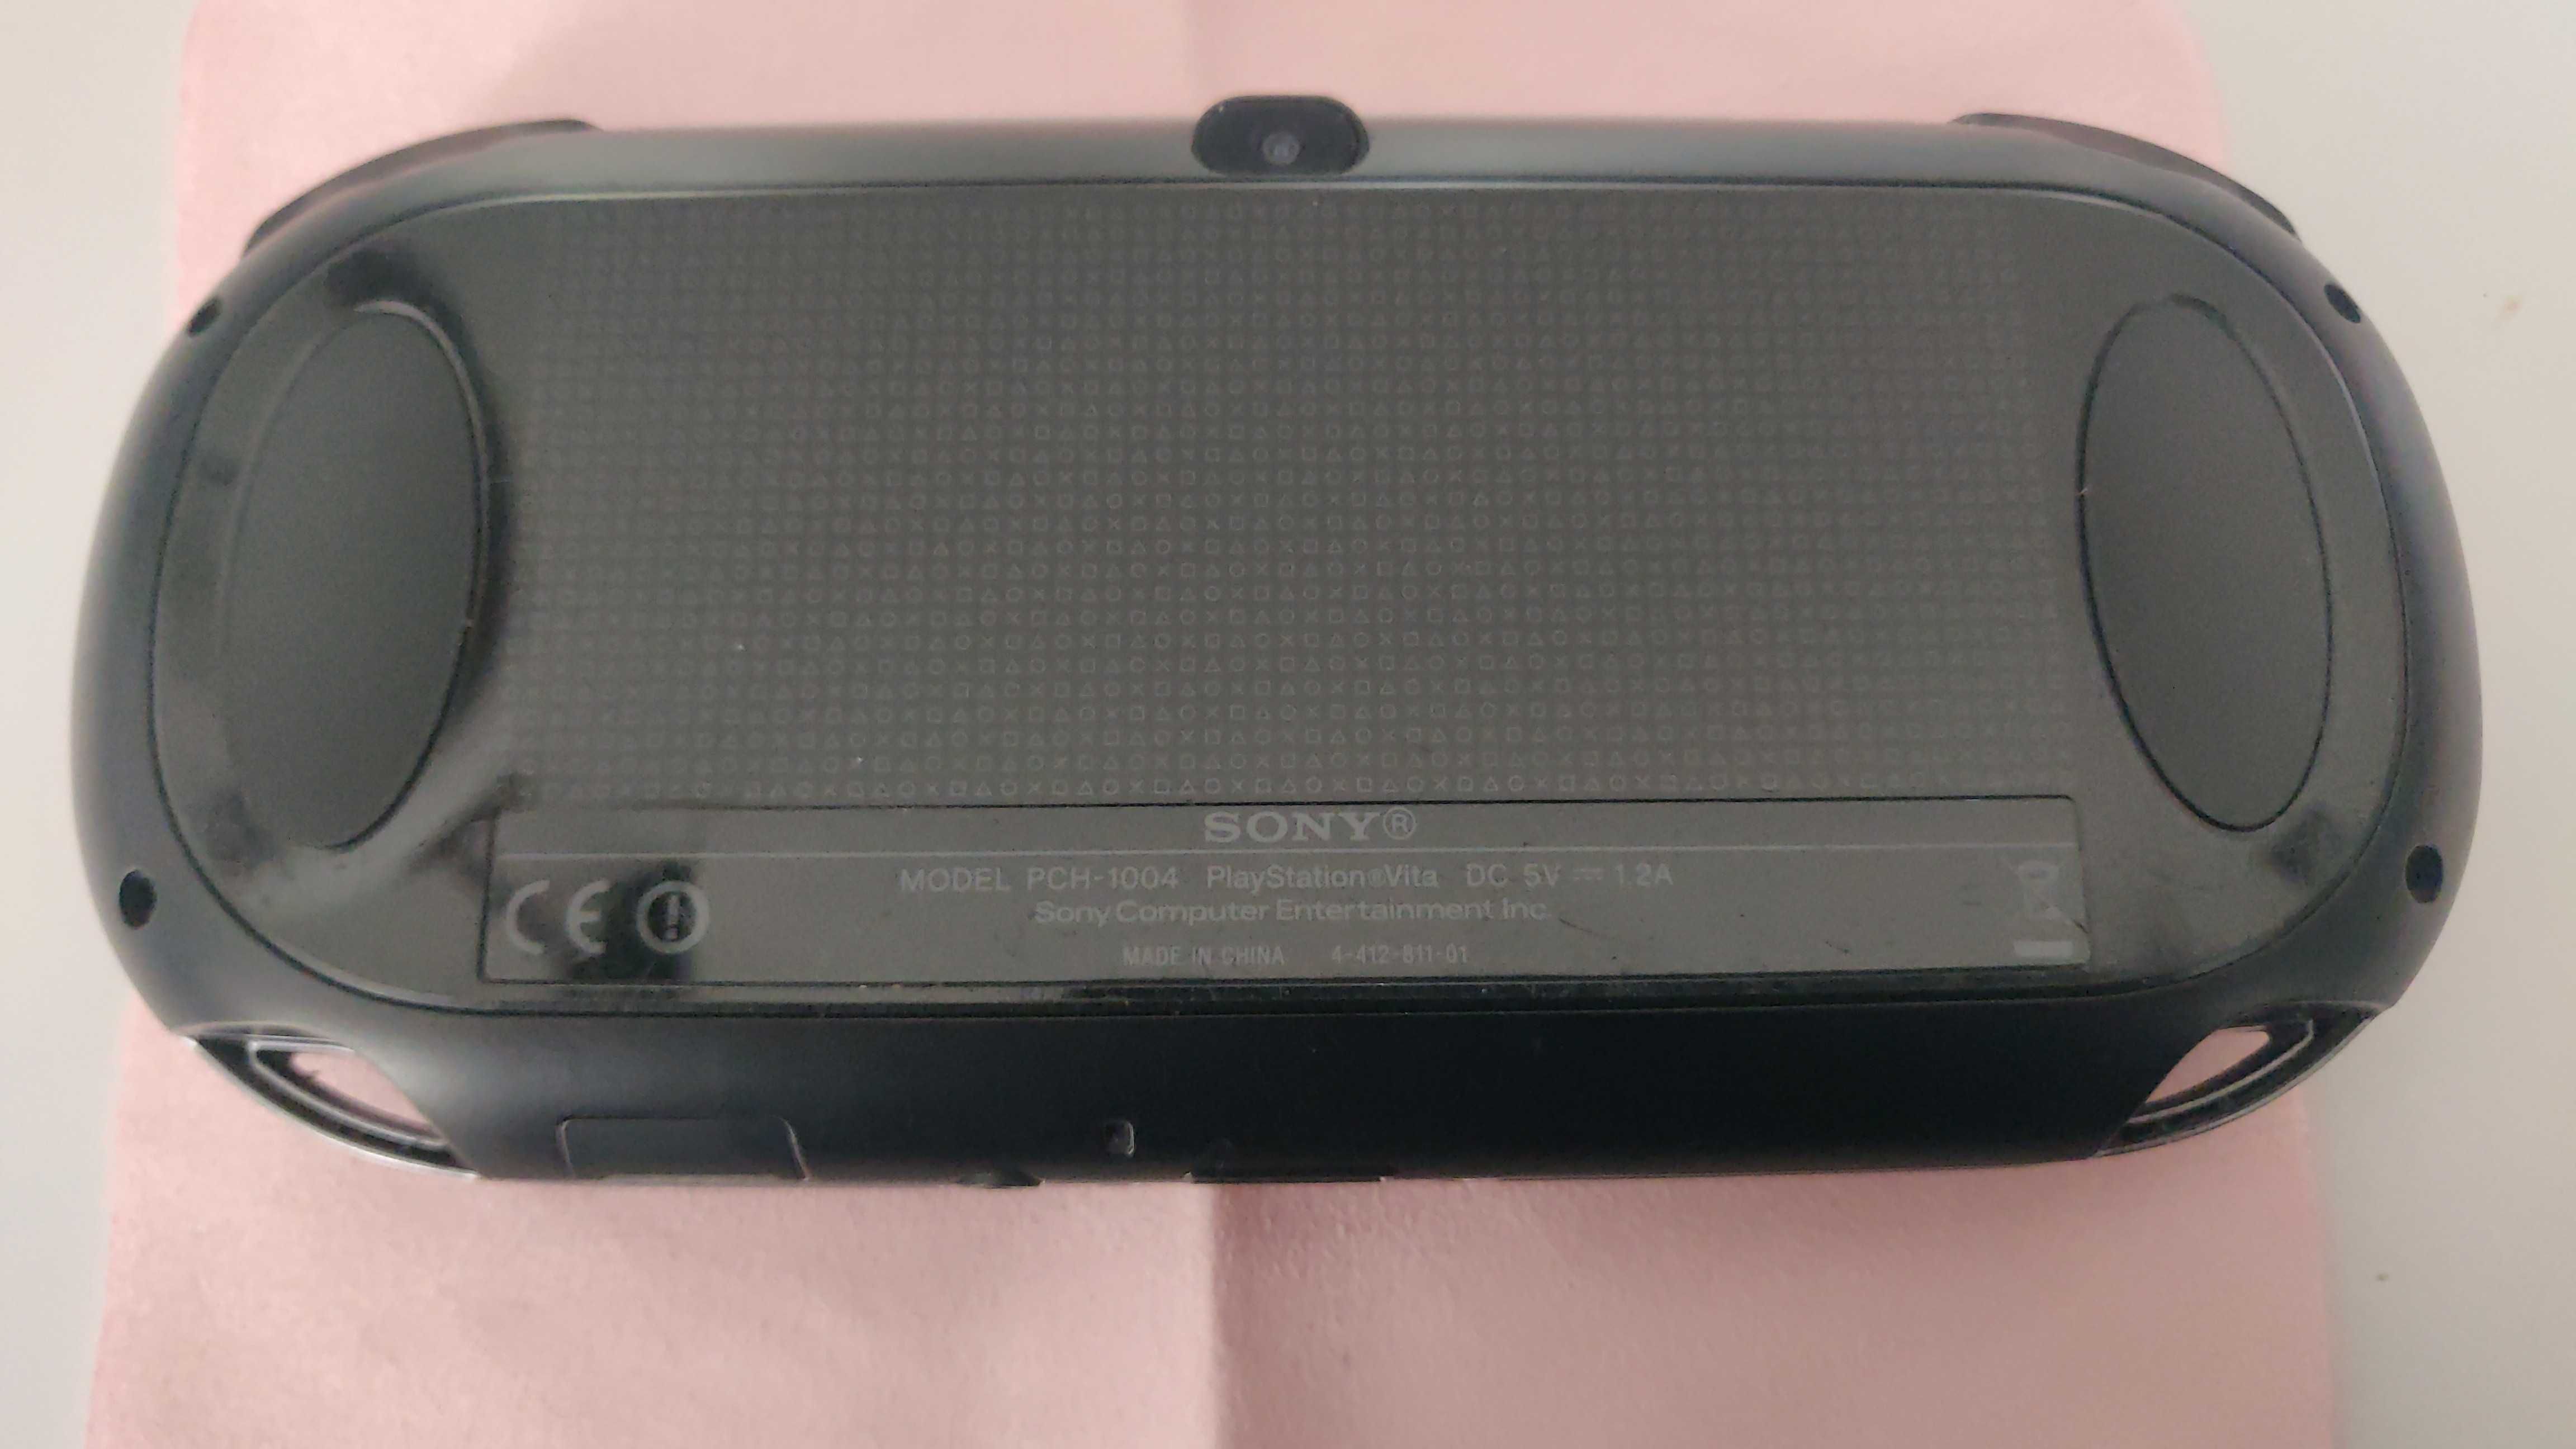 PlayStation Vita OLED PCH-1004 CFW henkaku